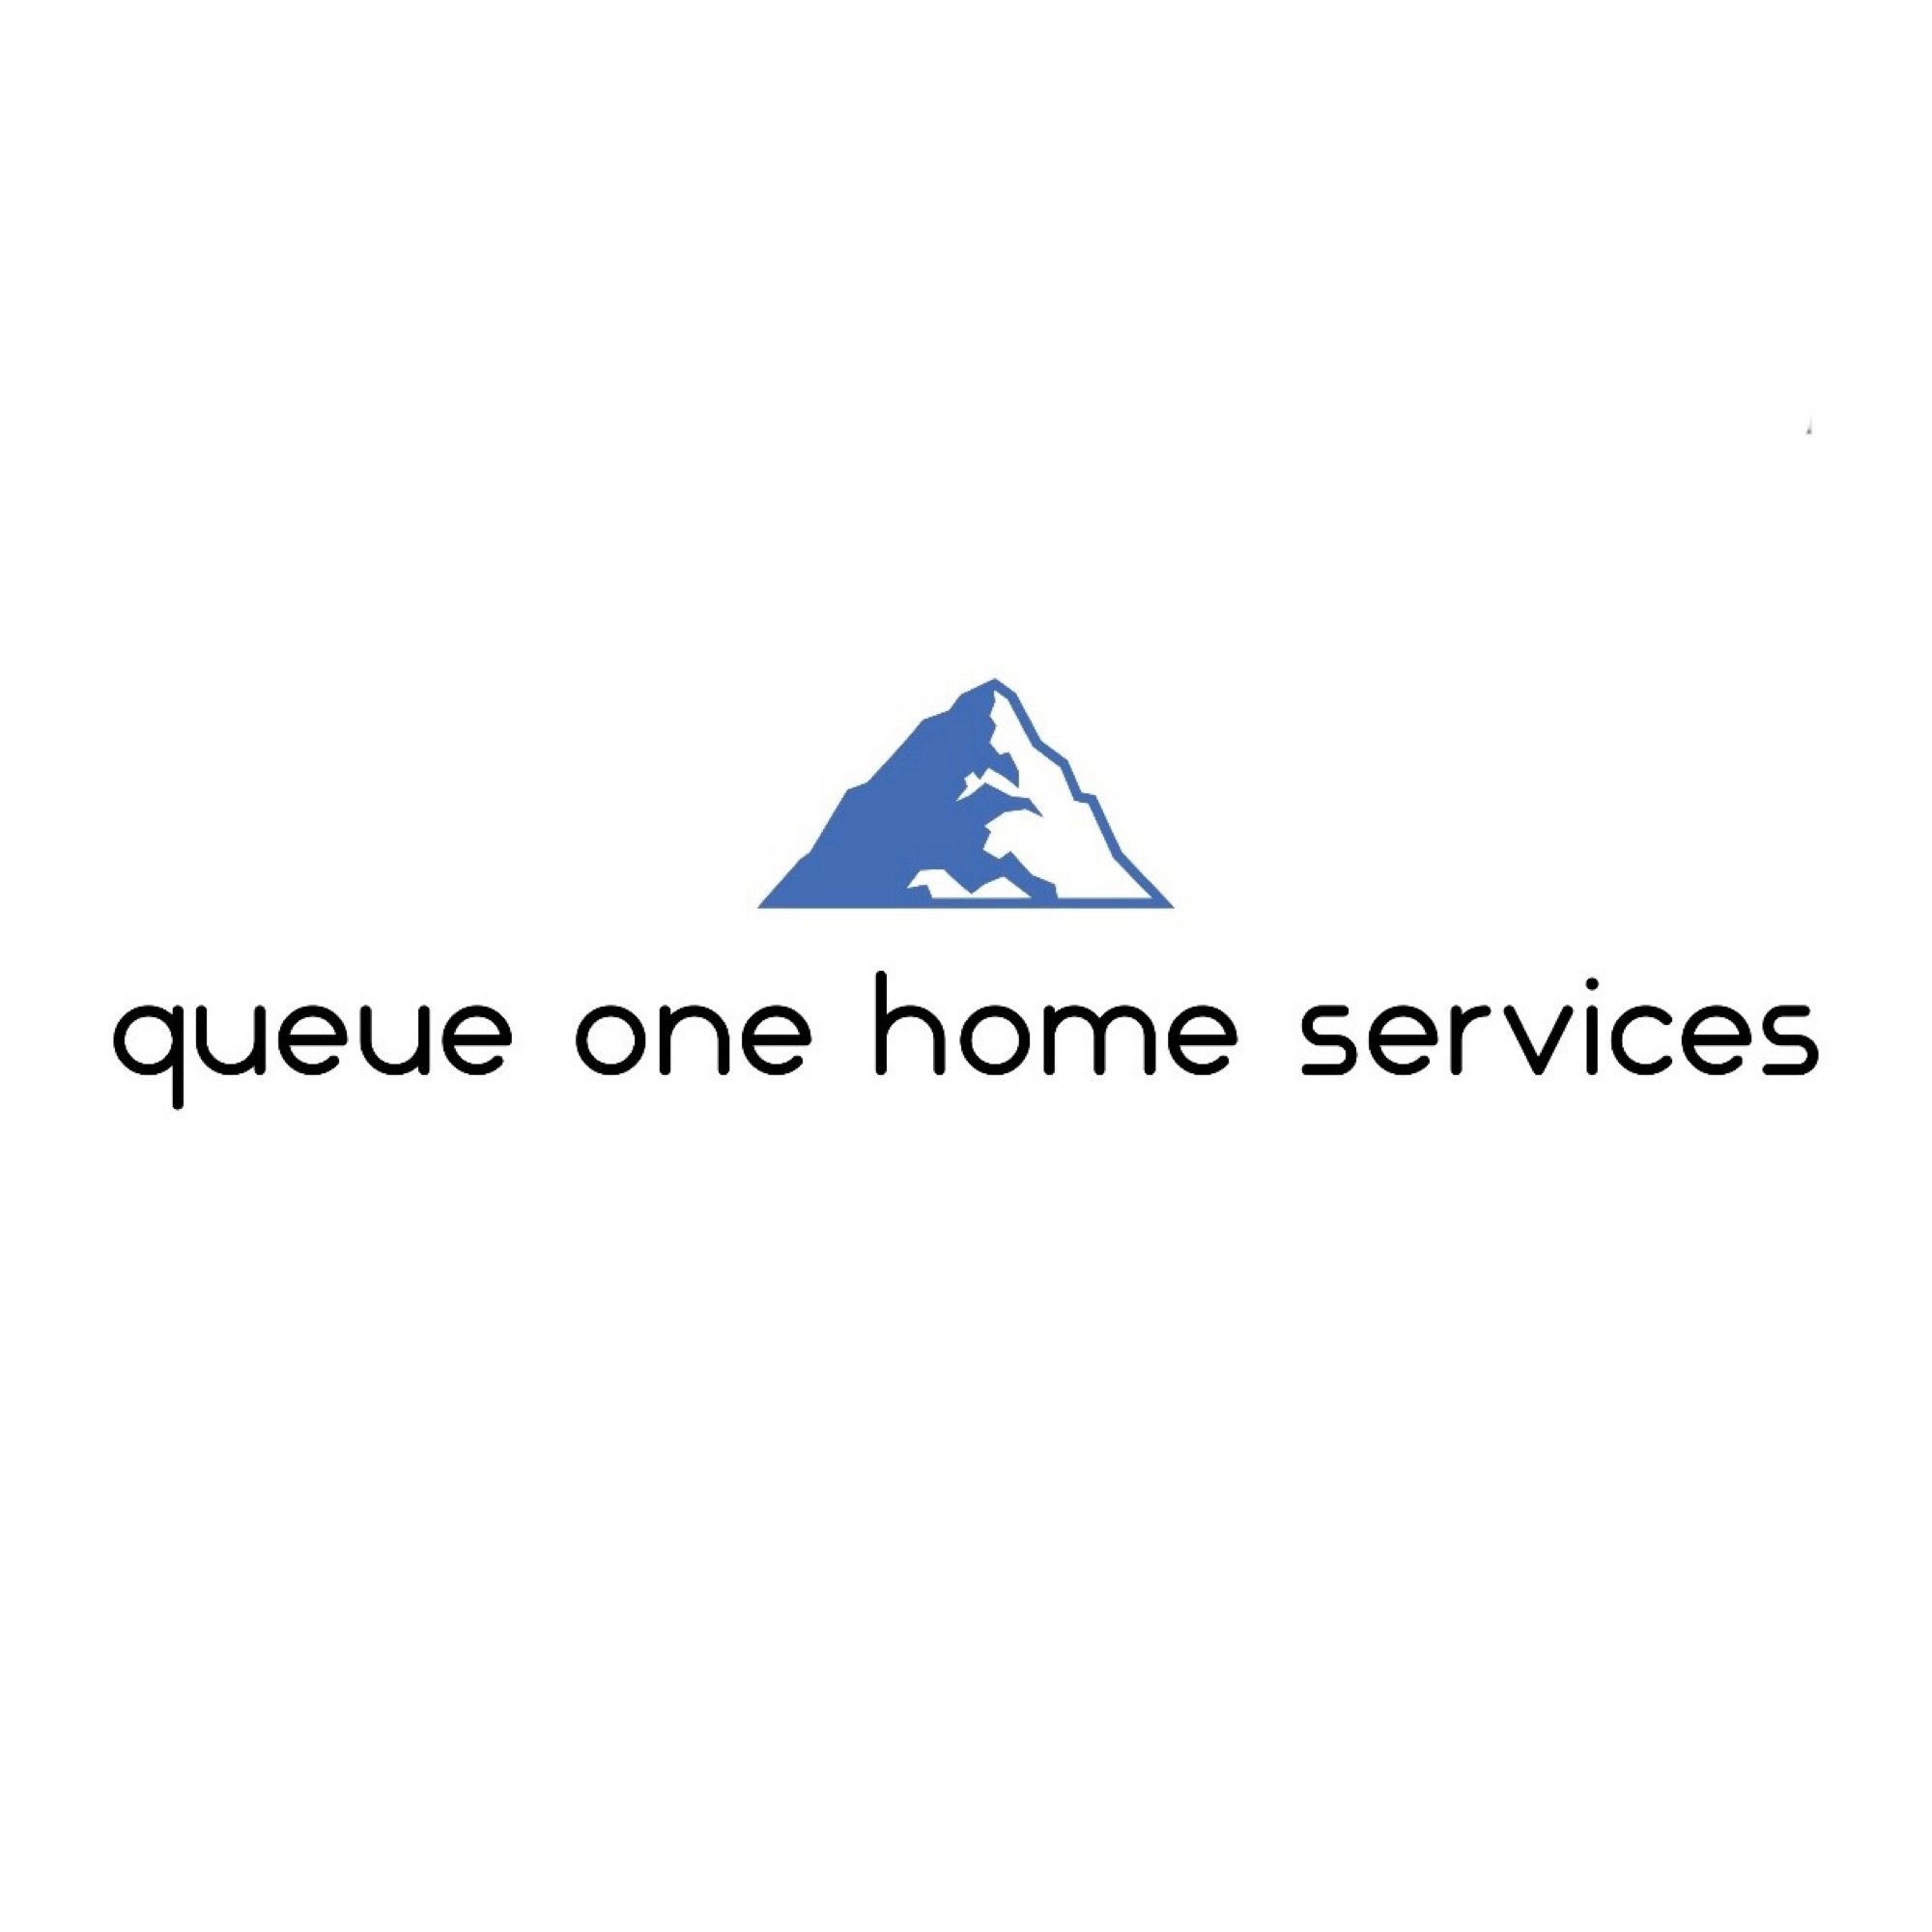 Queue One Home Services Logo